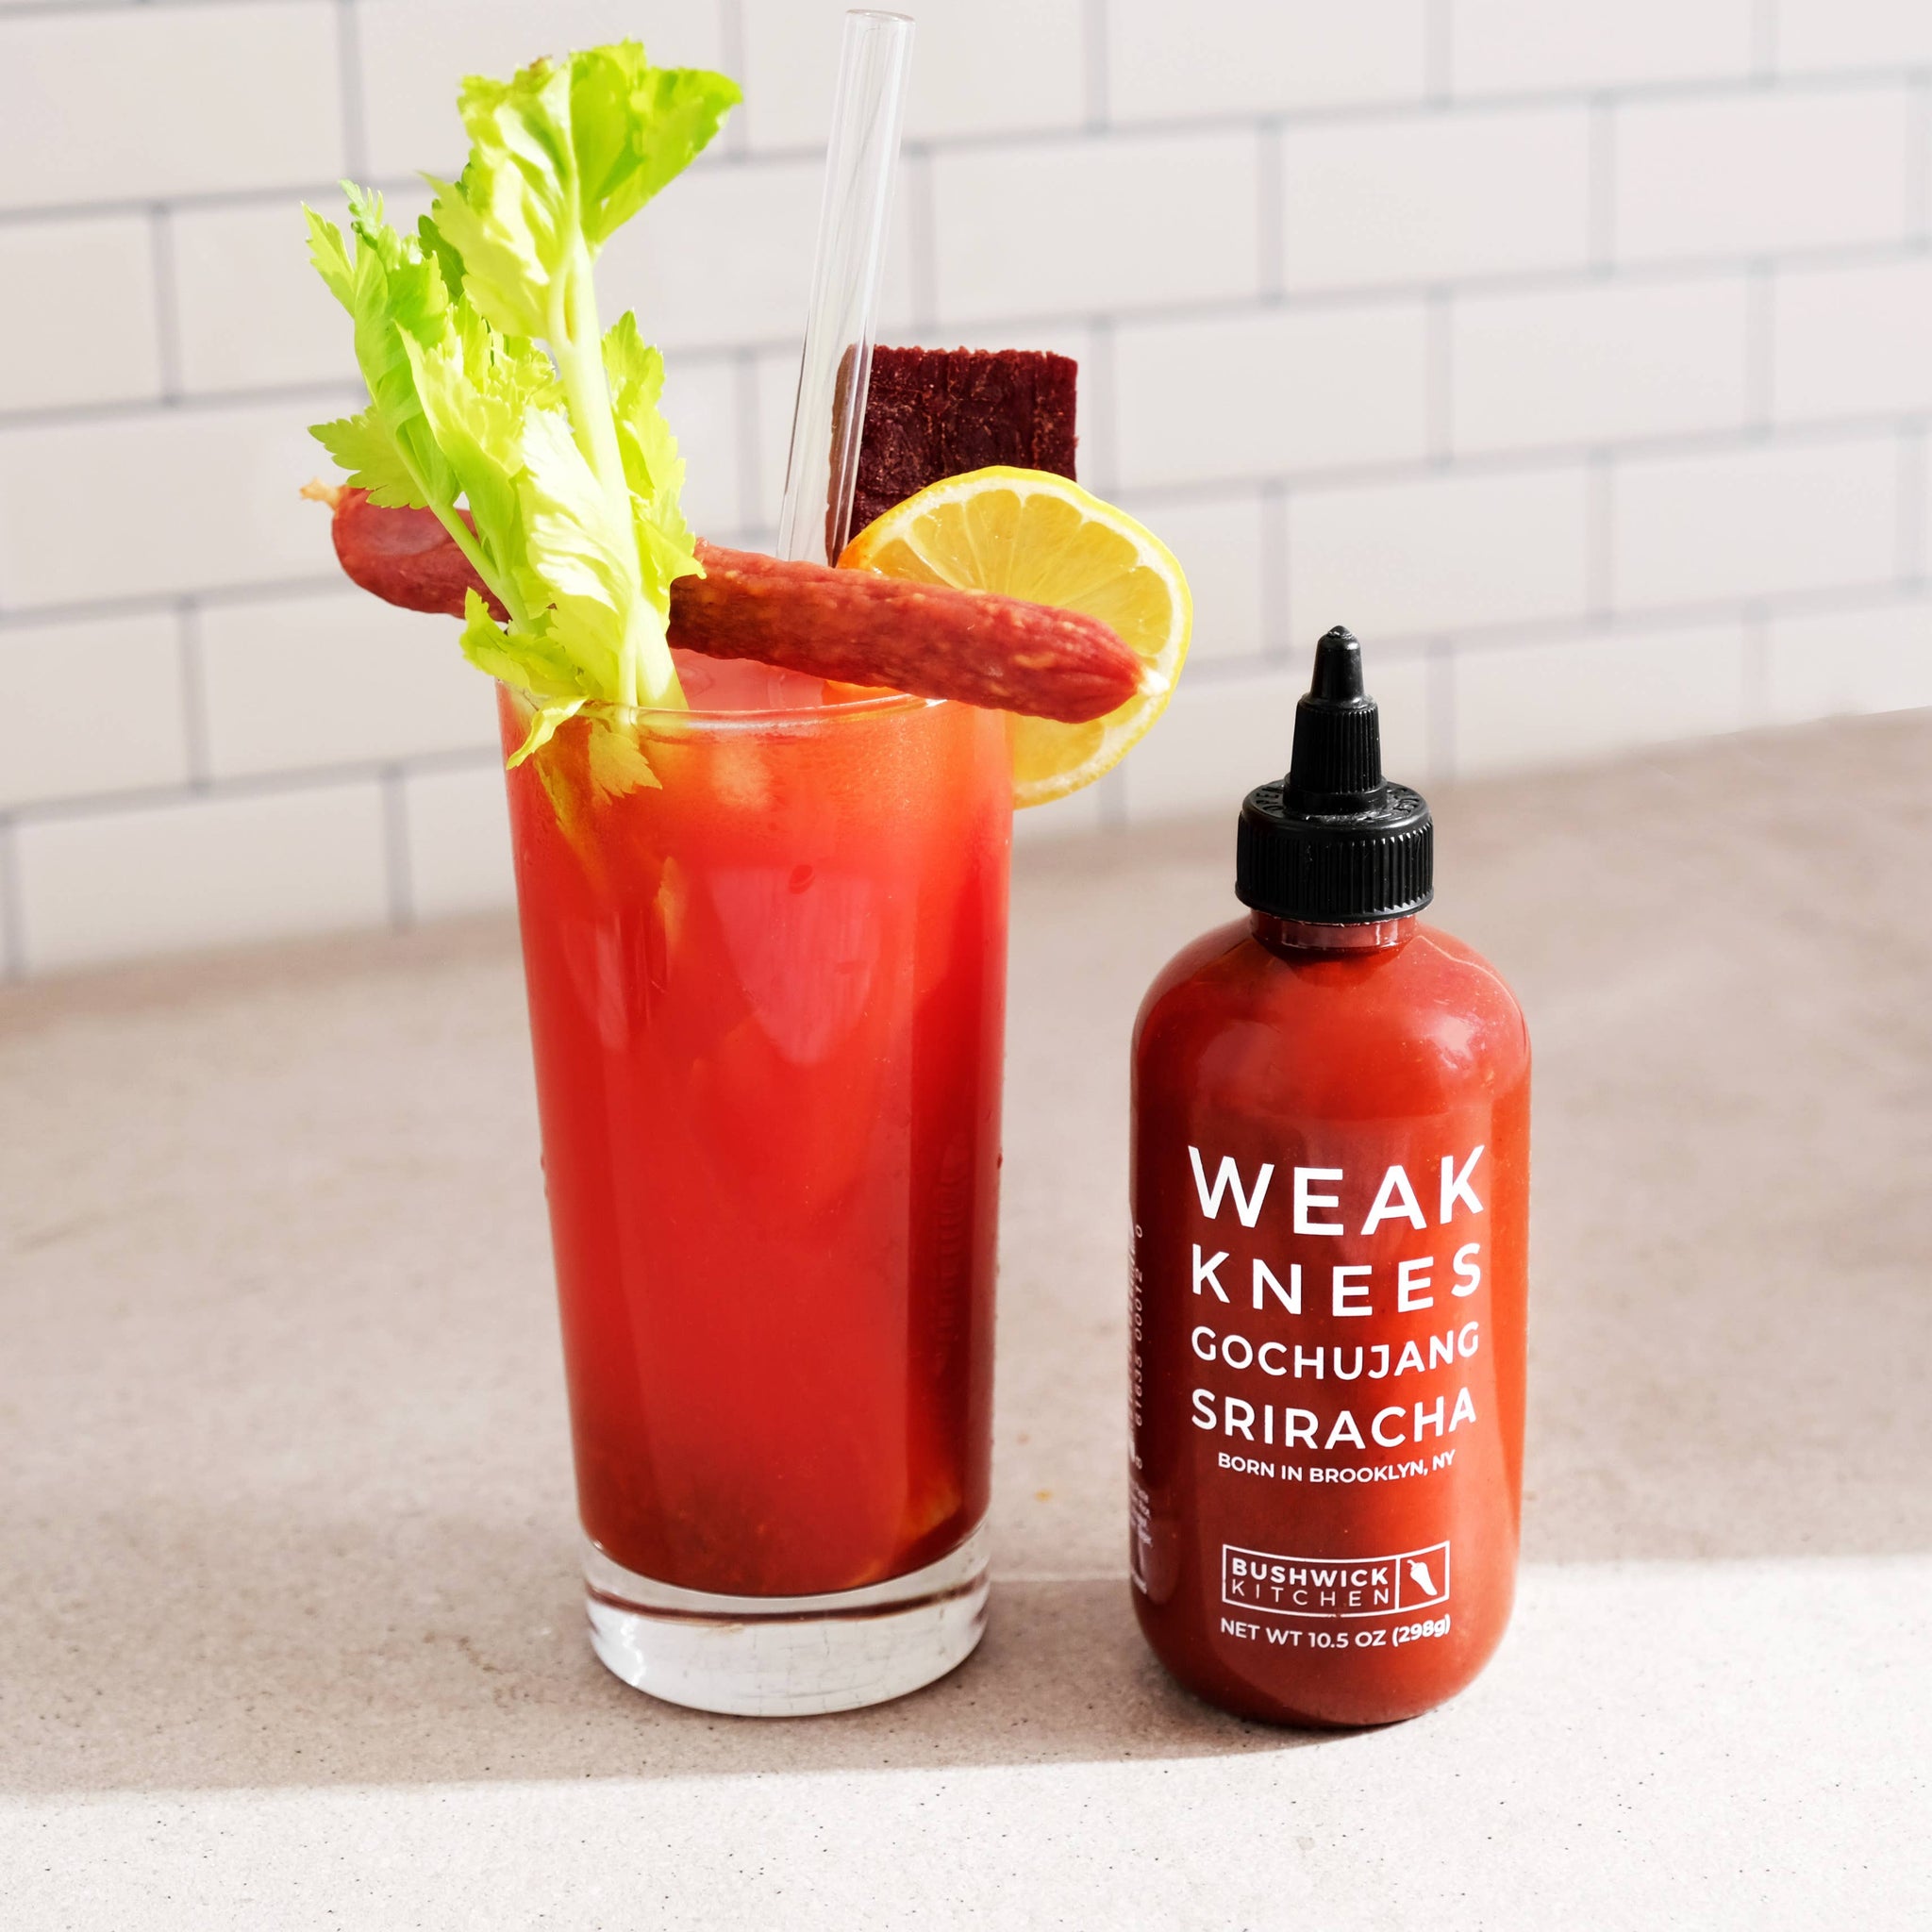 Weak Knees Gochujang Sriracha (Vegan)